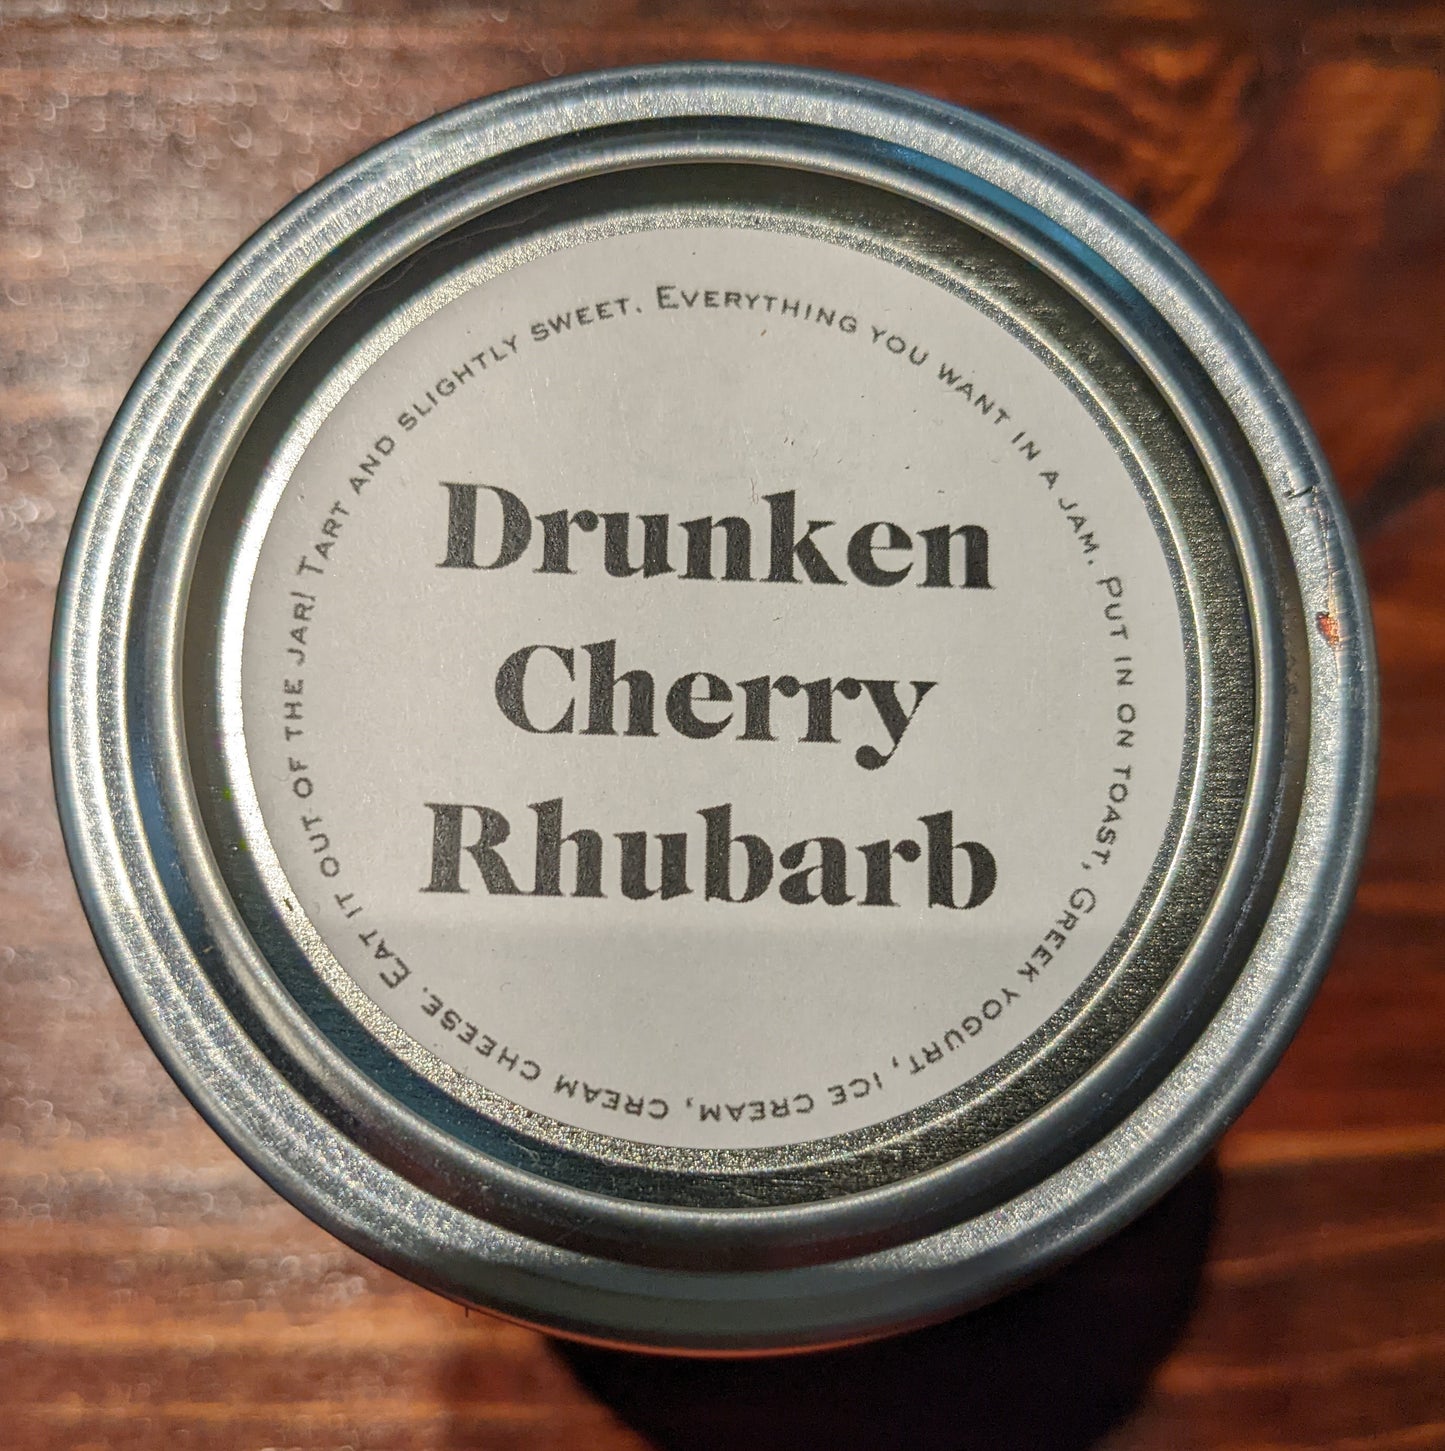 Drunken Cherry Rhubarb